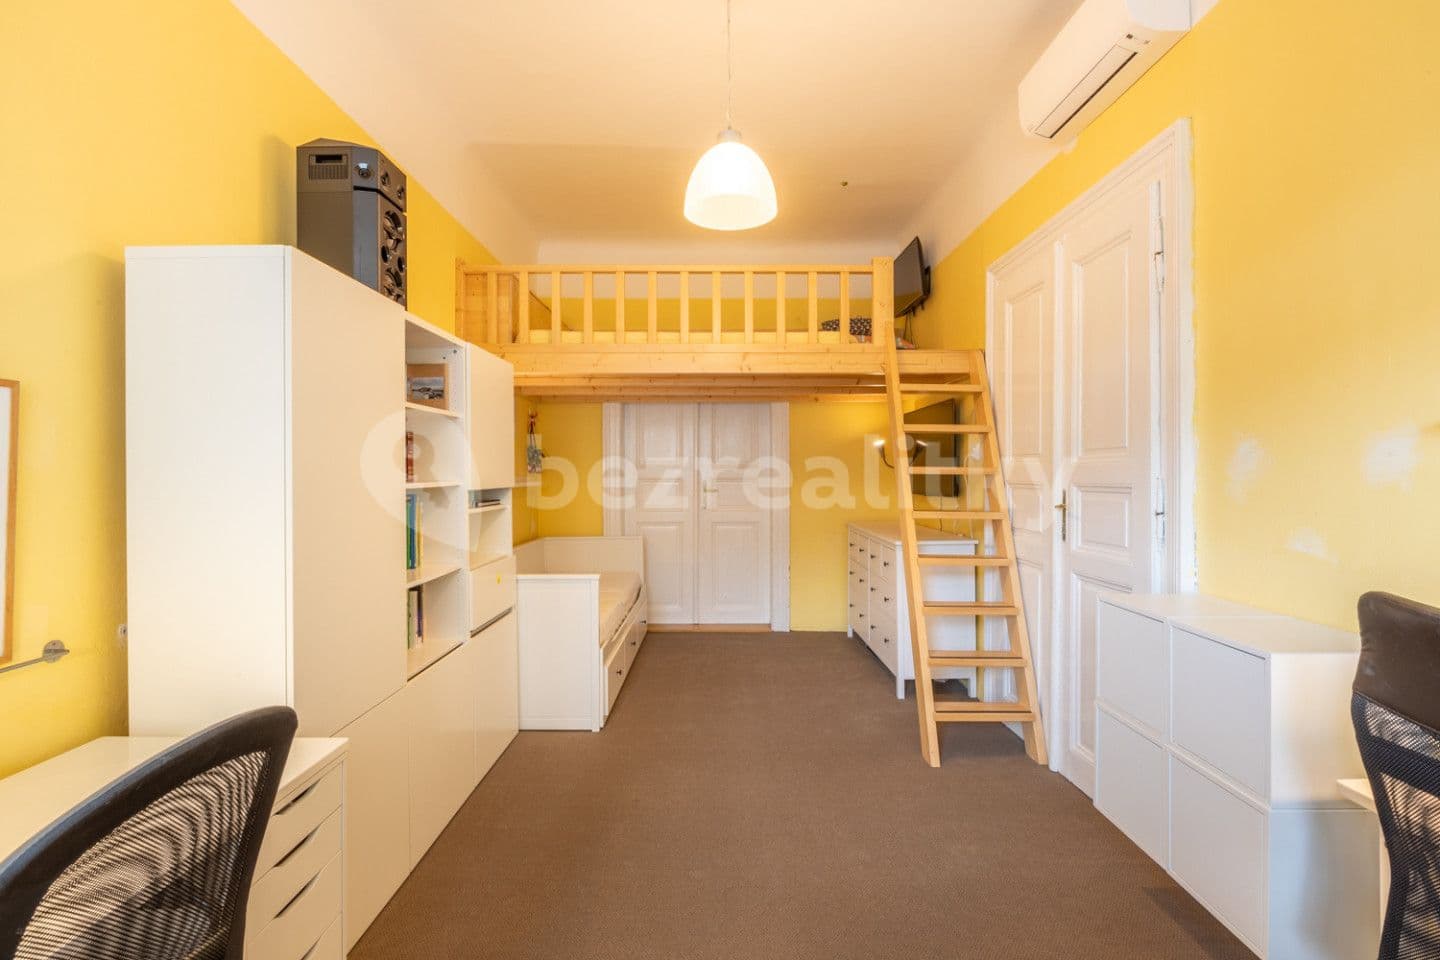 2 bedroom with open-plan kitchen flat for sale, 85 m², Palackého, Prague, Prague